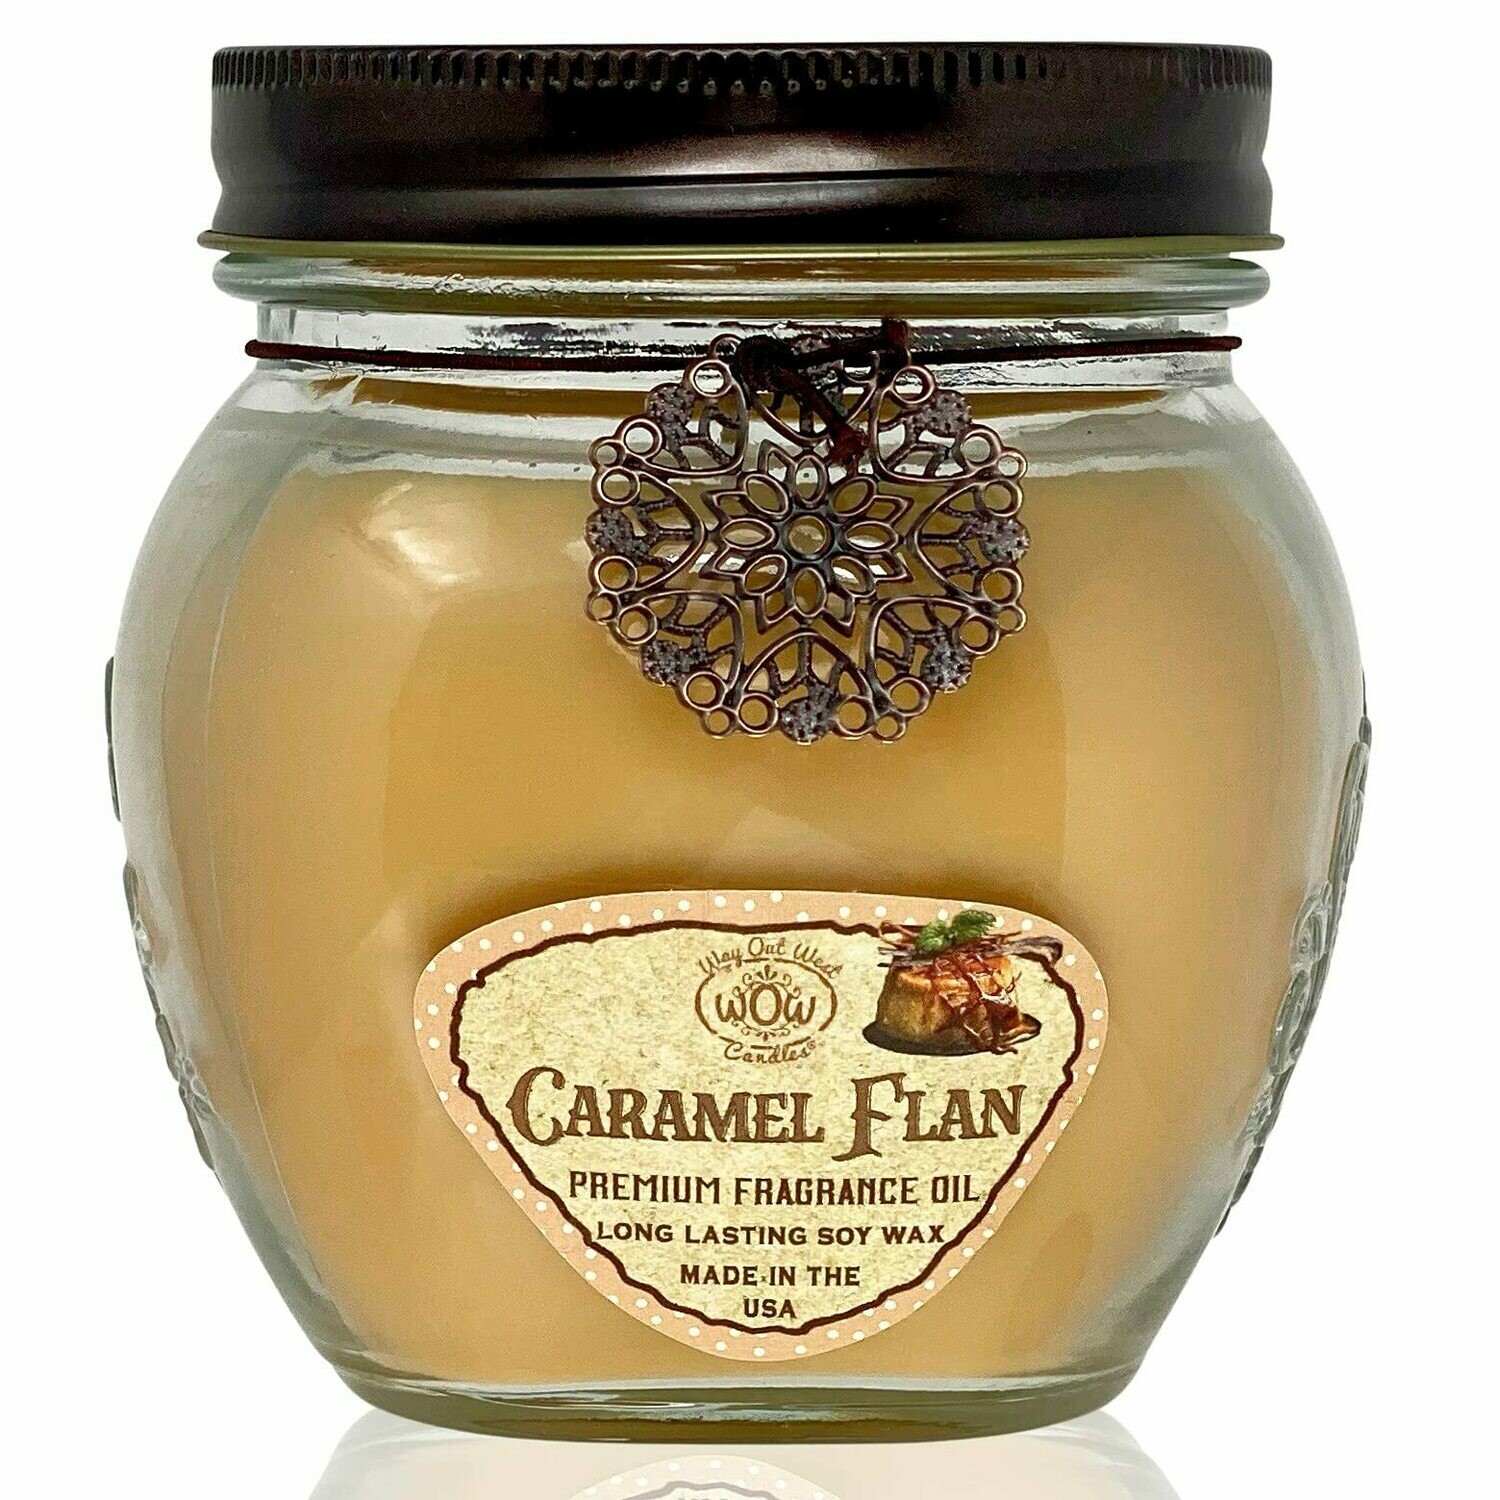 Caramel Flan